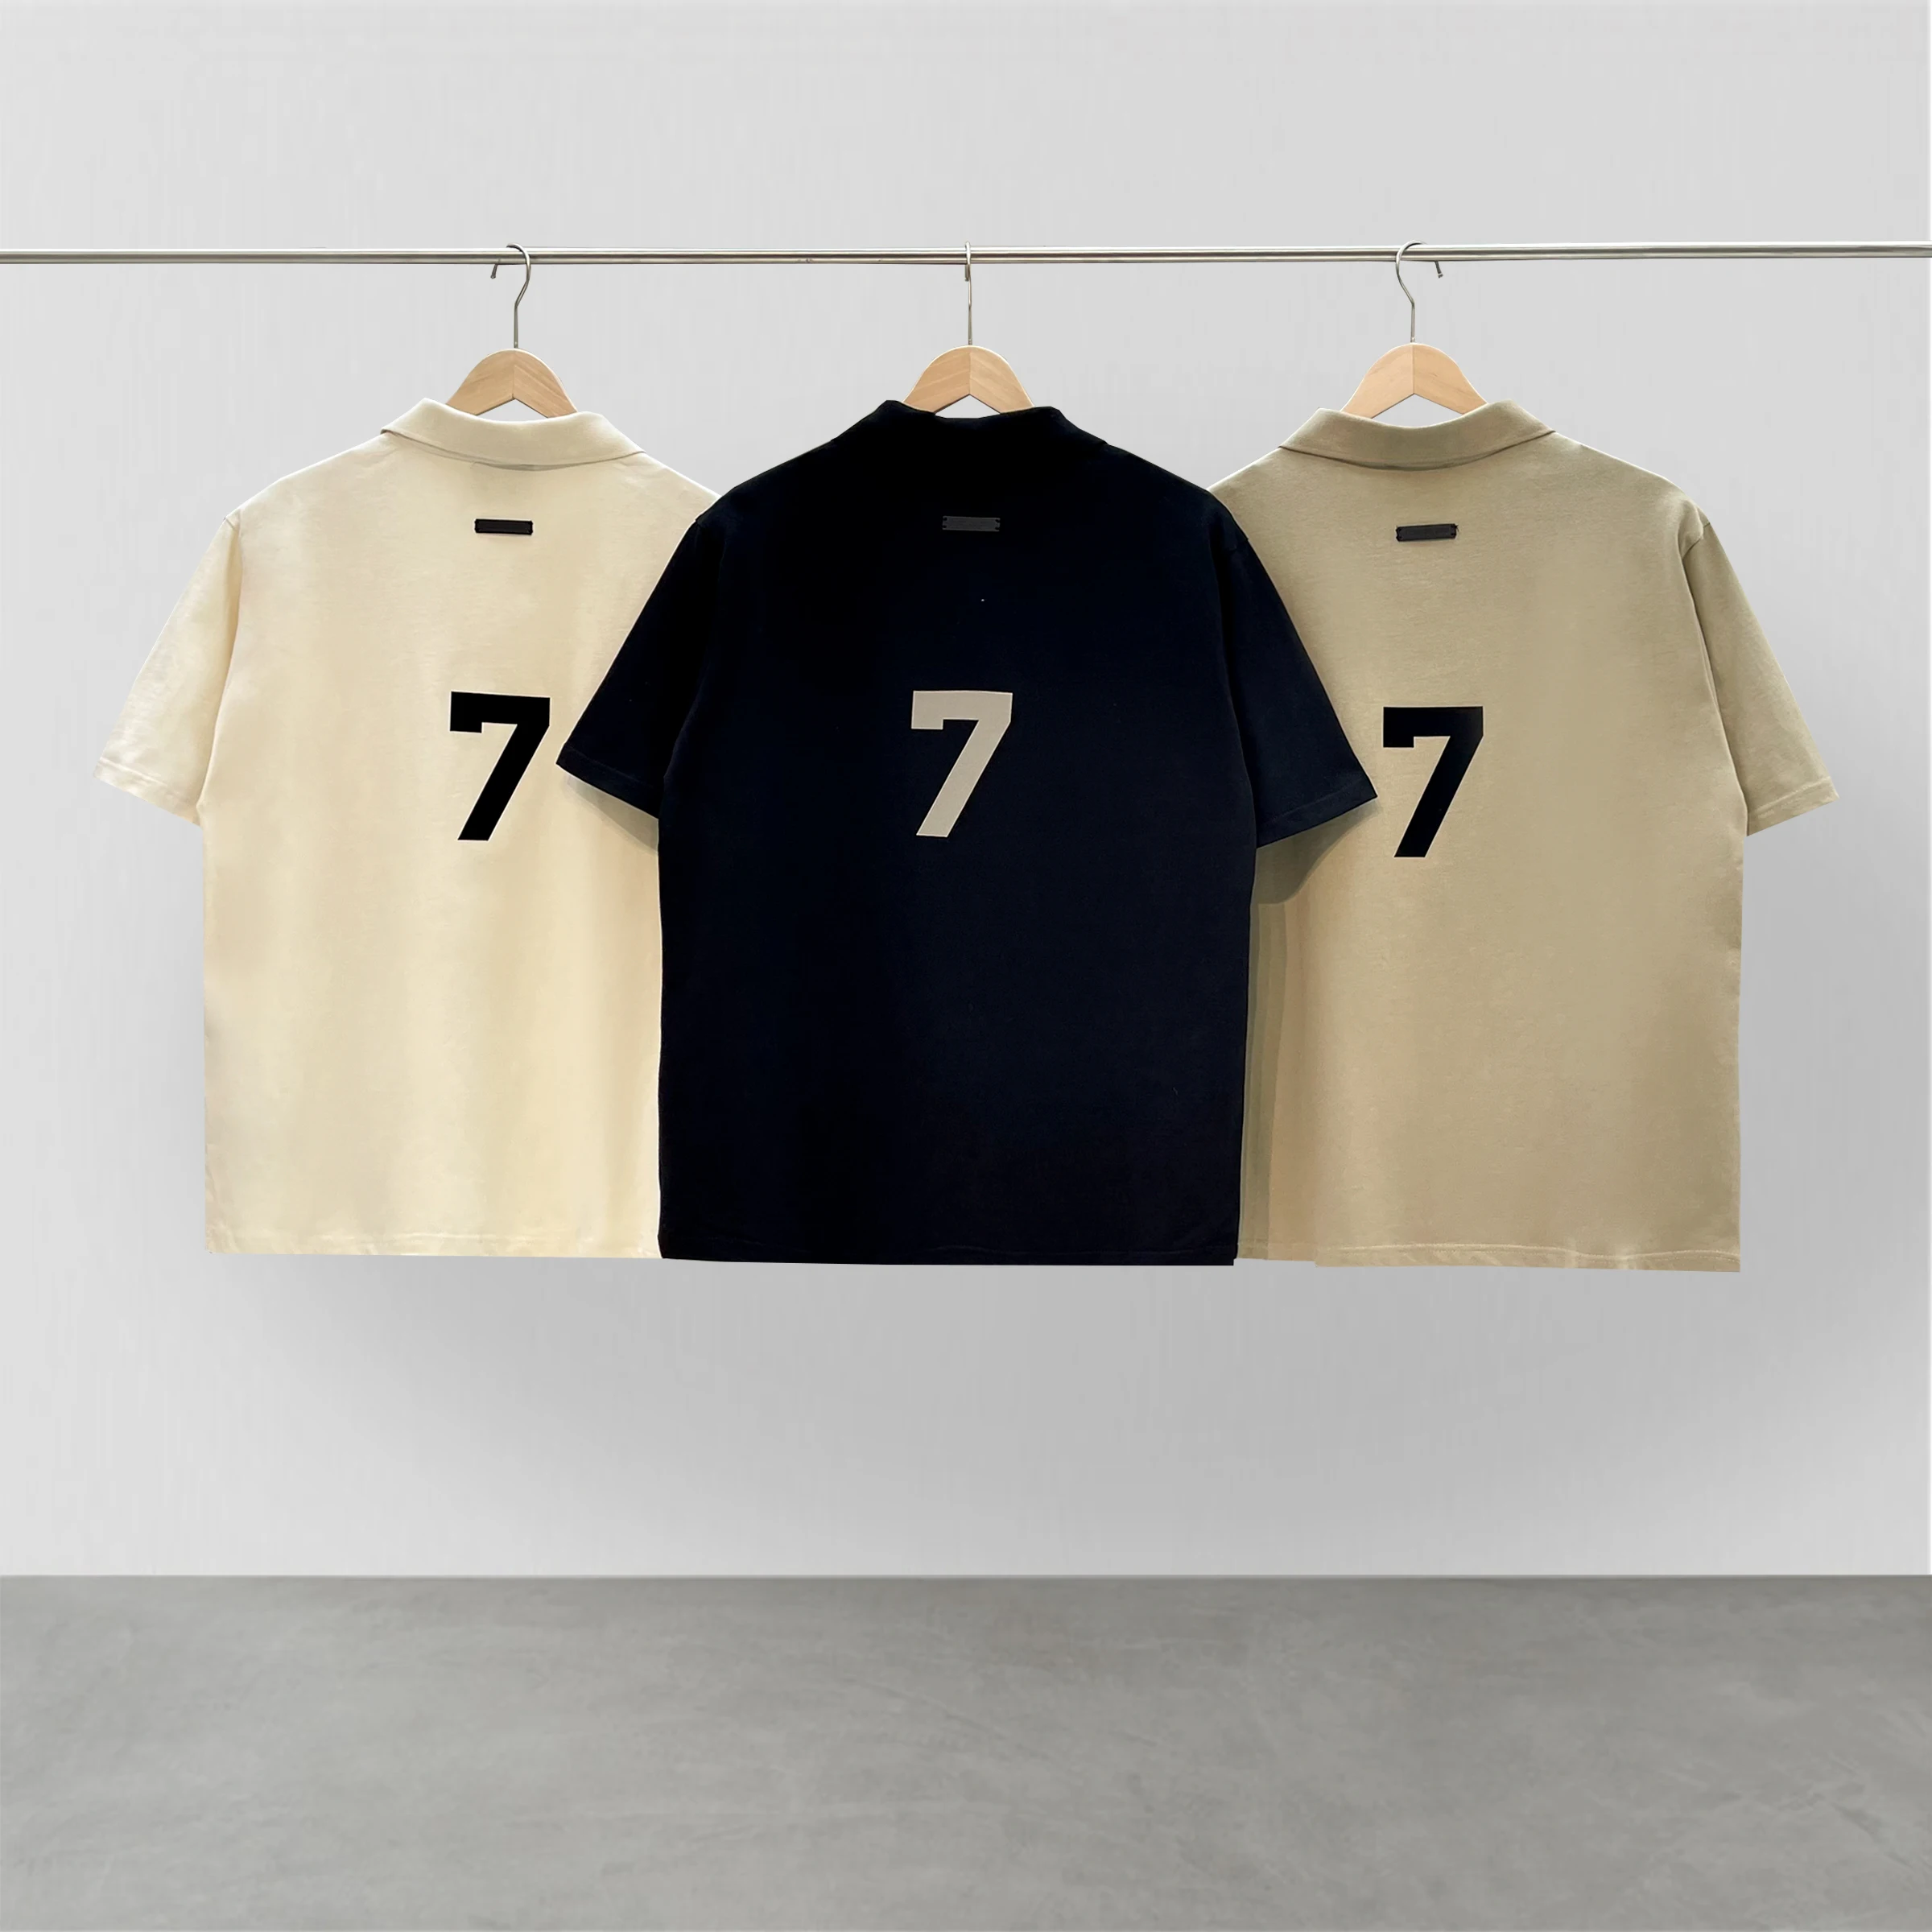 Essentials New Street Fashion Brand Men's polo shirt Back 7 Flocked Printing T-shirt Hip Hop Loose Oversize Unisex Short Sleeve